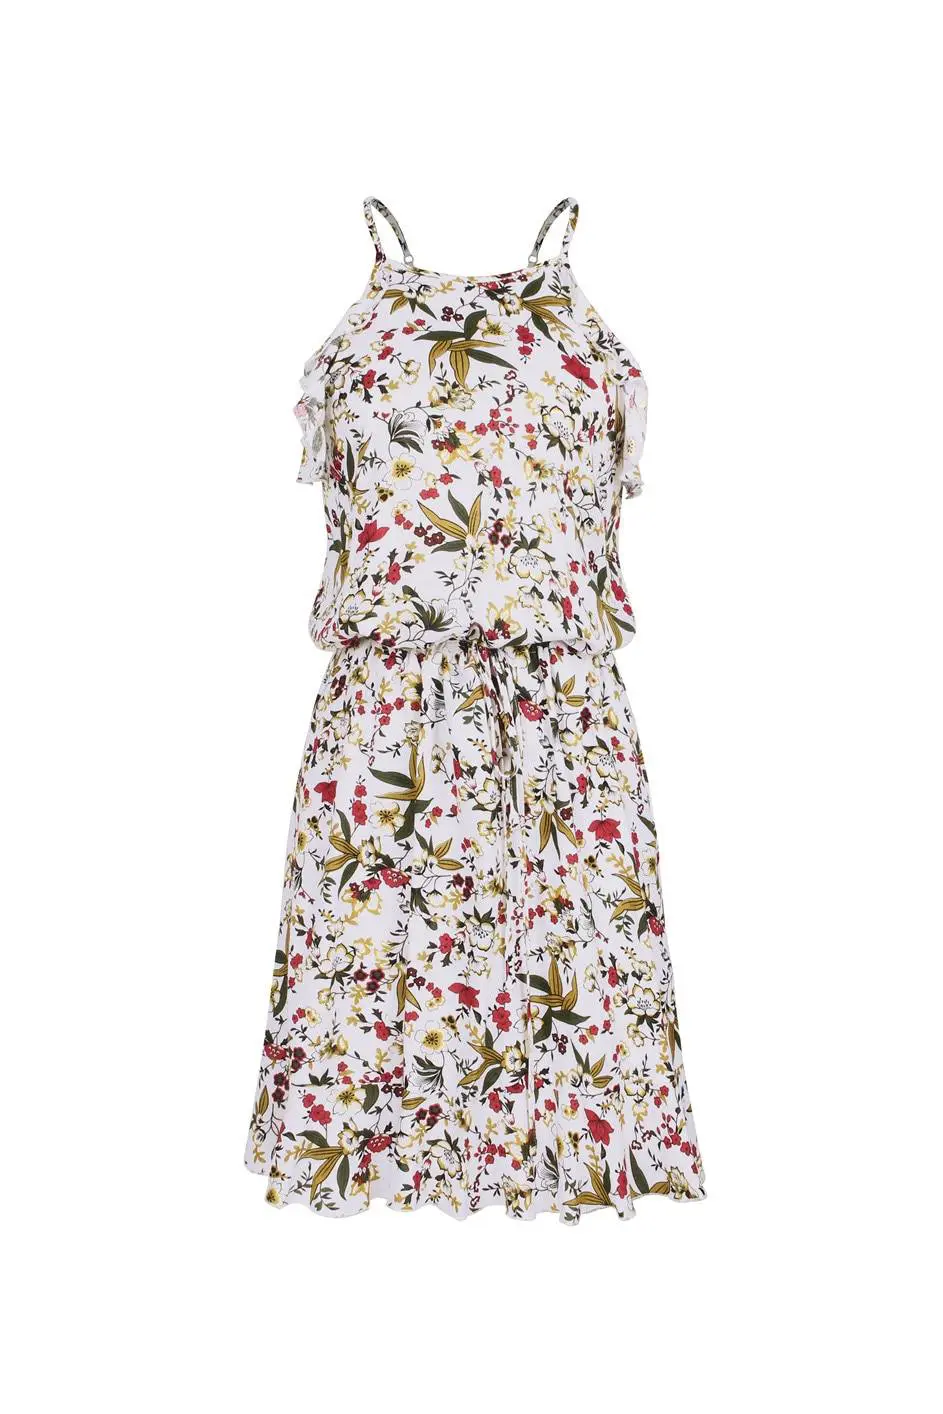 Halter Print Sleeveless Ruffles Above Knee Mini Floral Dress in Dresses